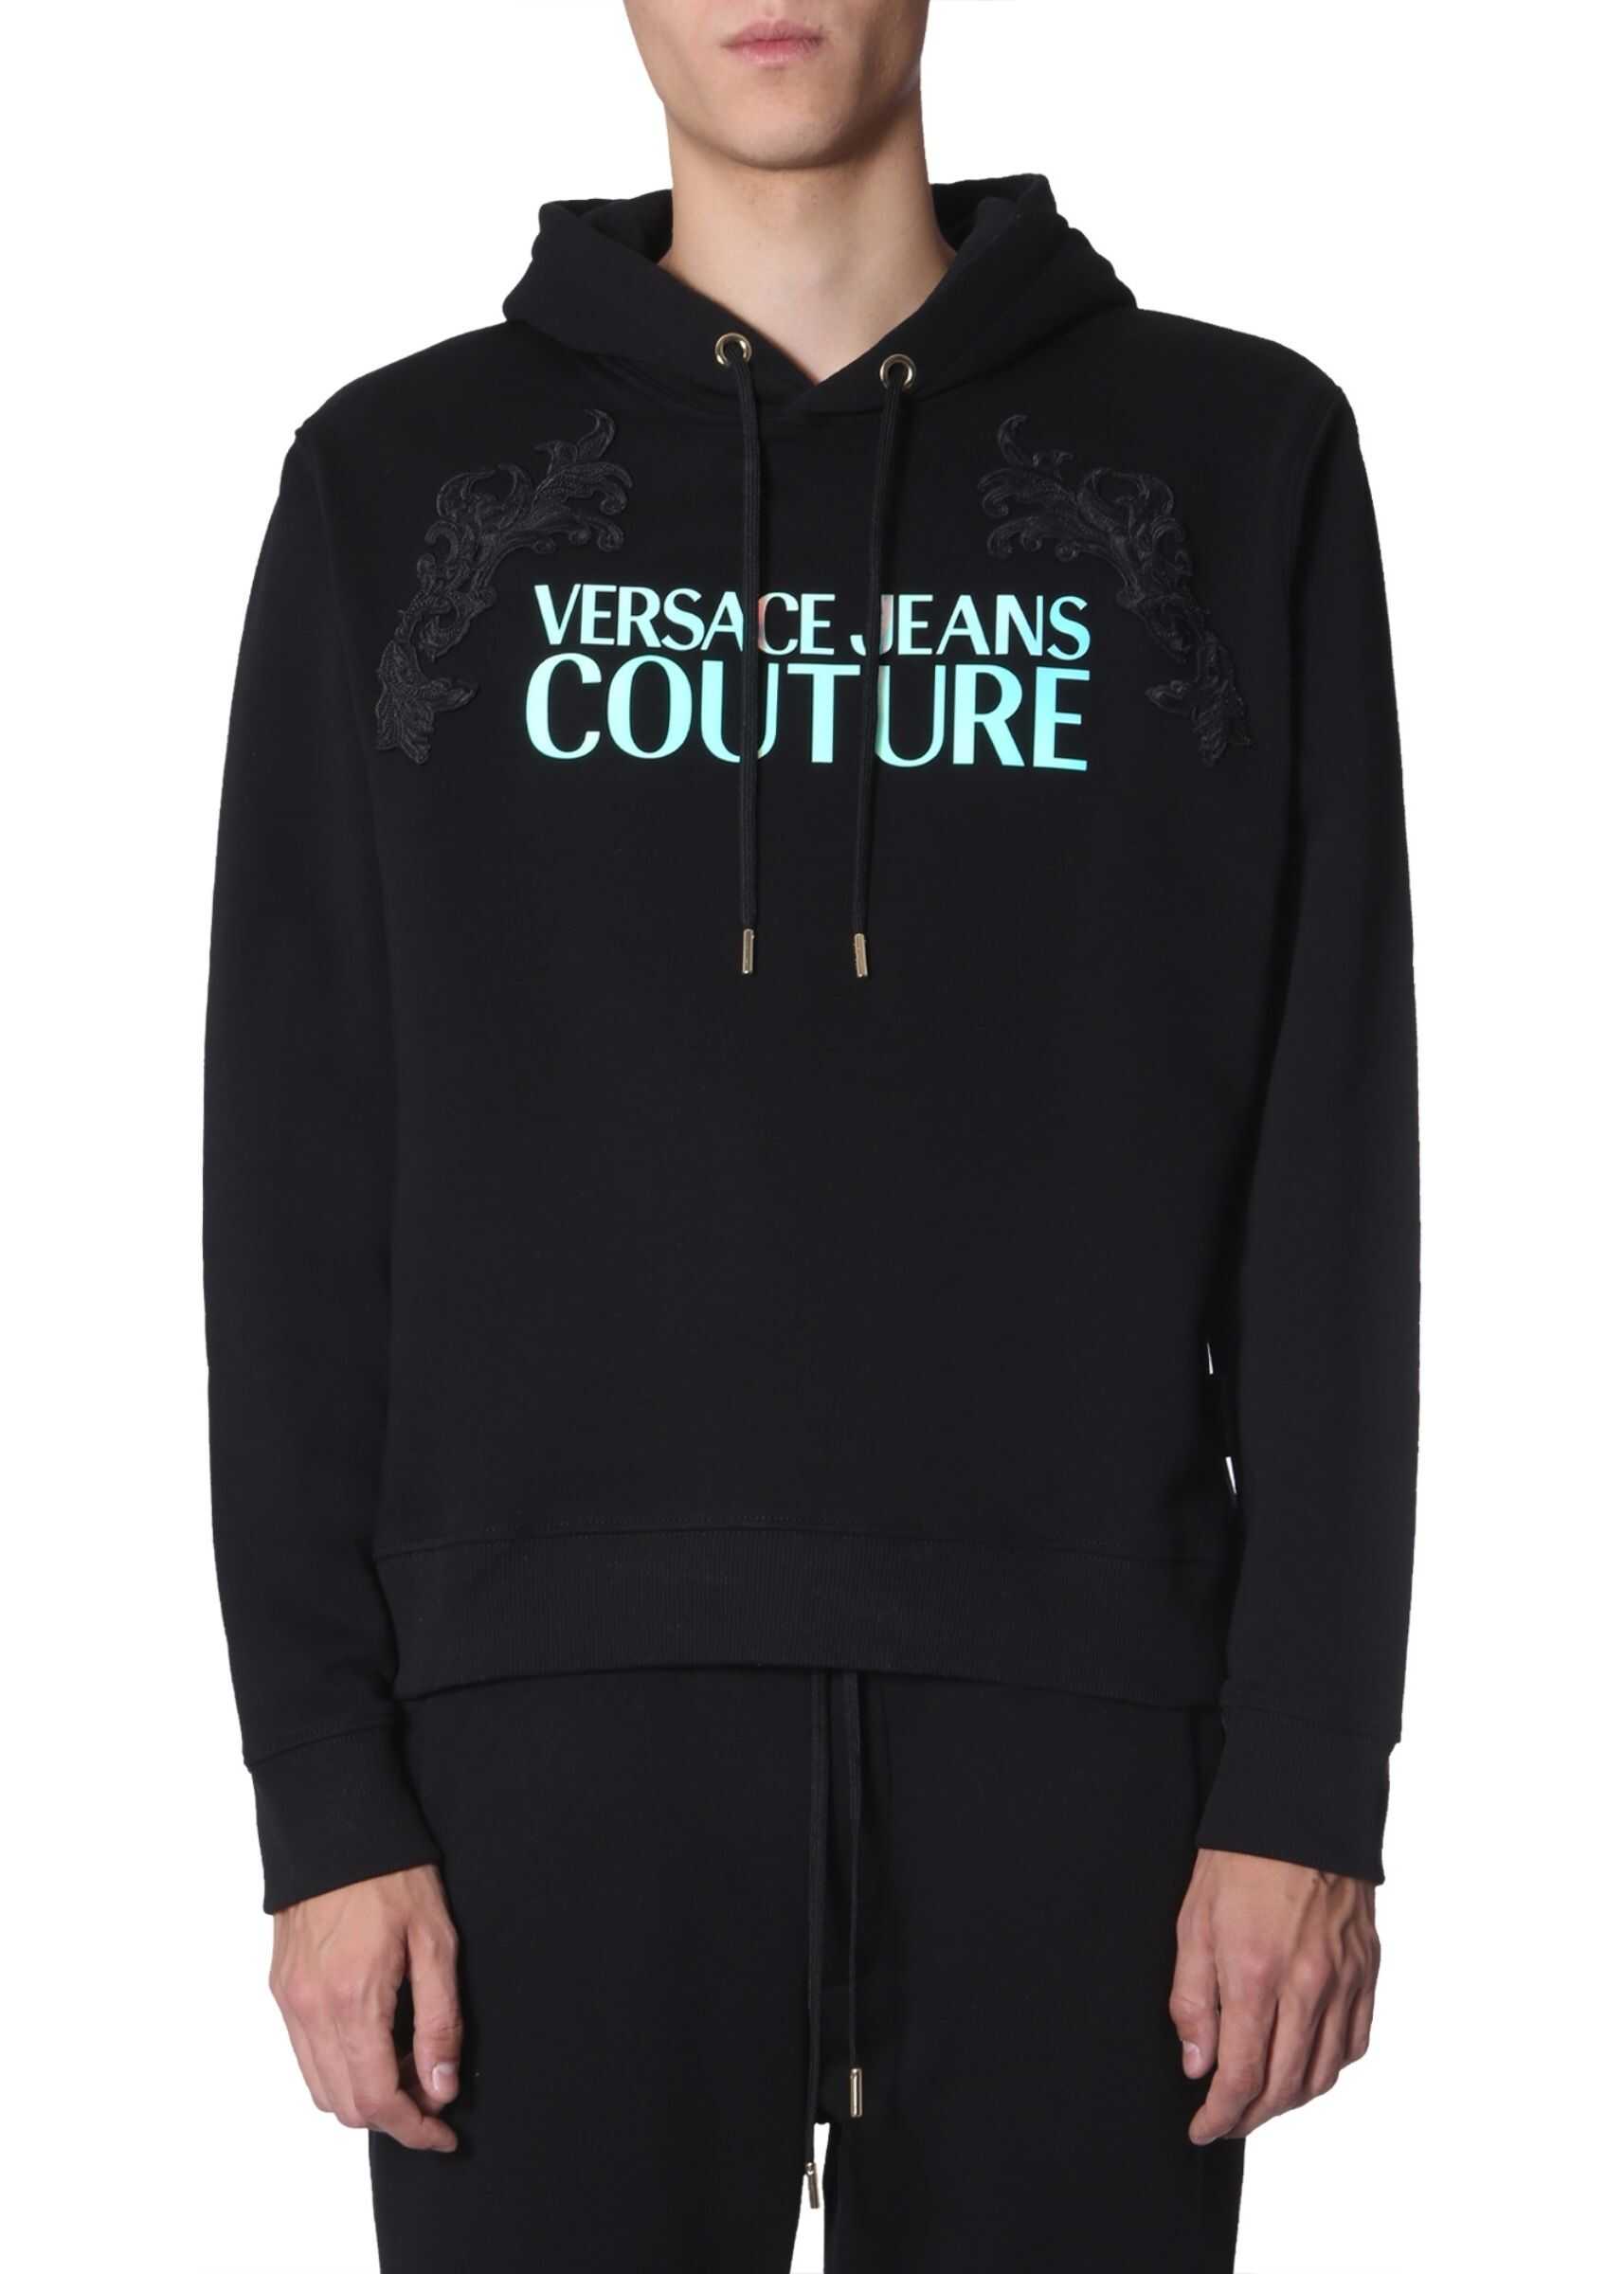 Versace Jeans Couture Hooded Sweatshirt BLACK